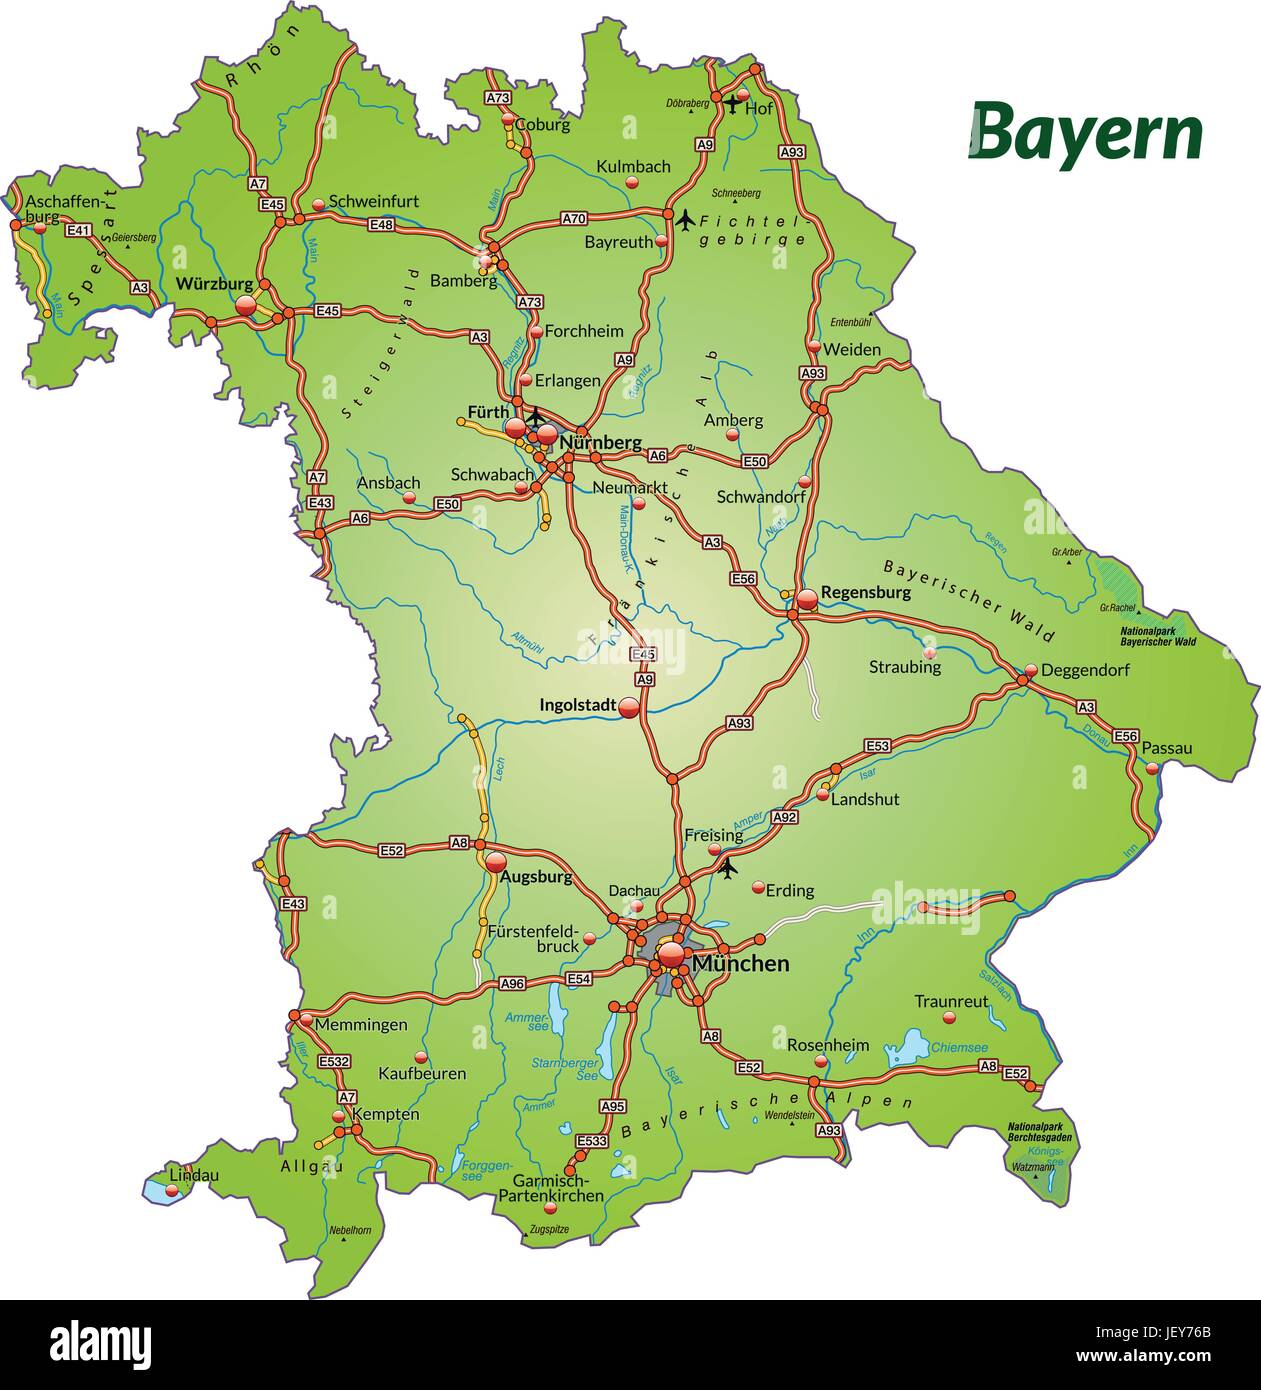 Modell, Design, Projekt, Konzept, Plan, Entwurf, Verkehr, Transport, Bayern, Stock Vektor